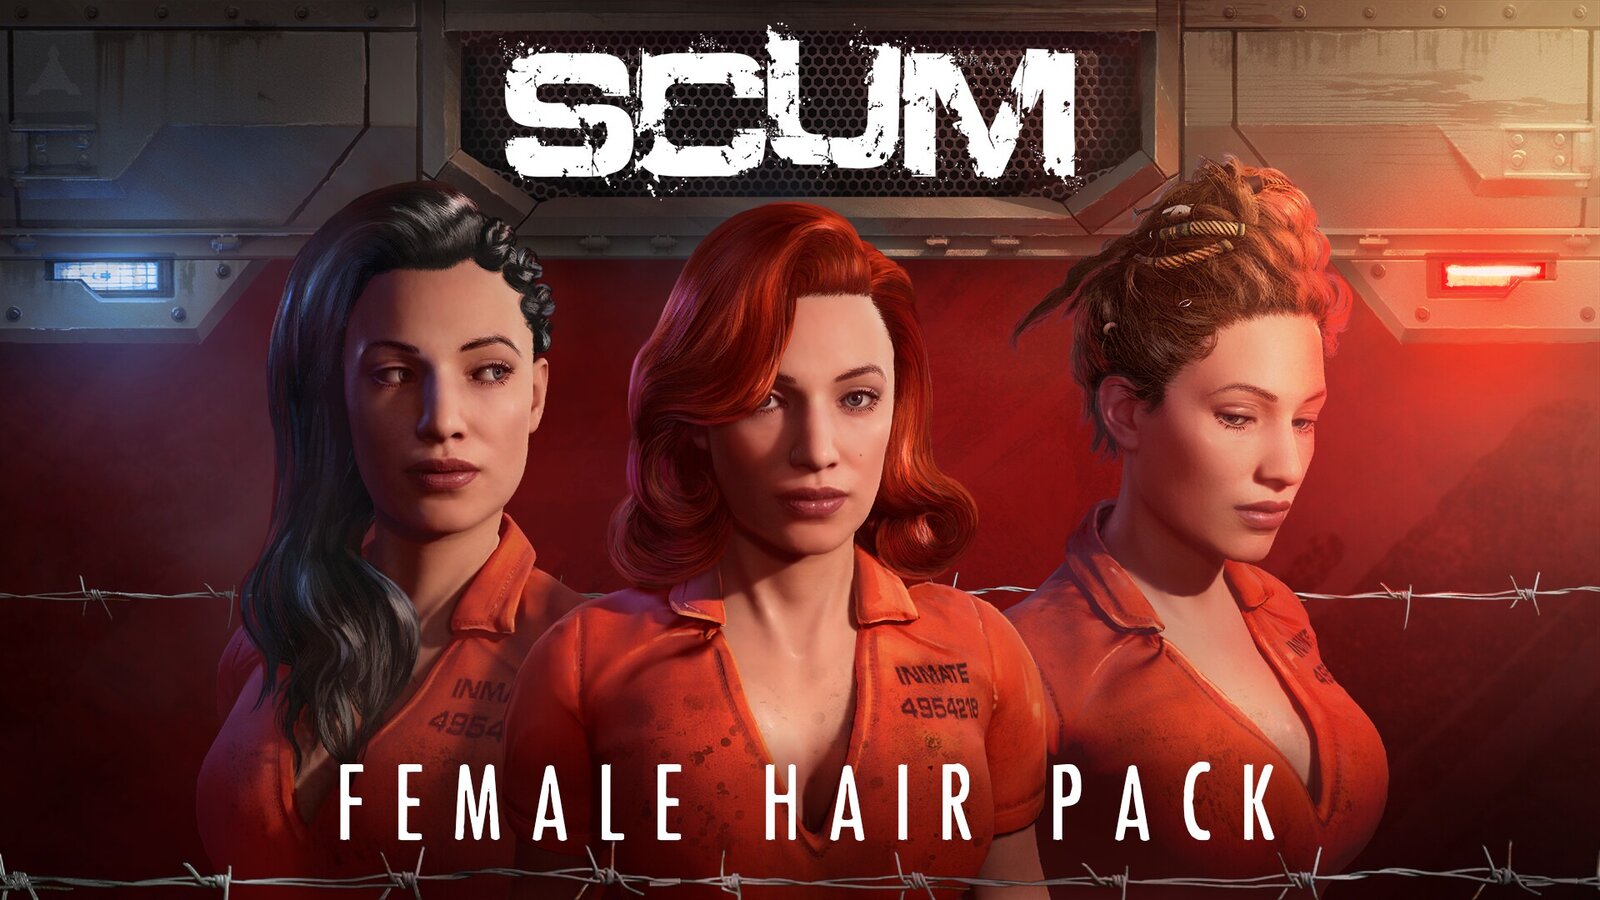 SCUM: Female Hair Pack